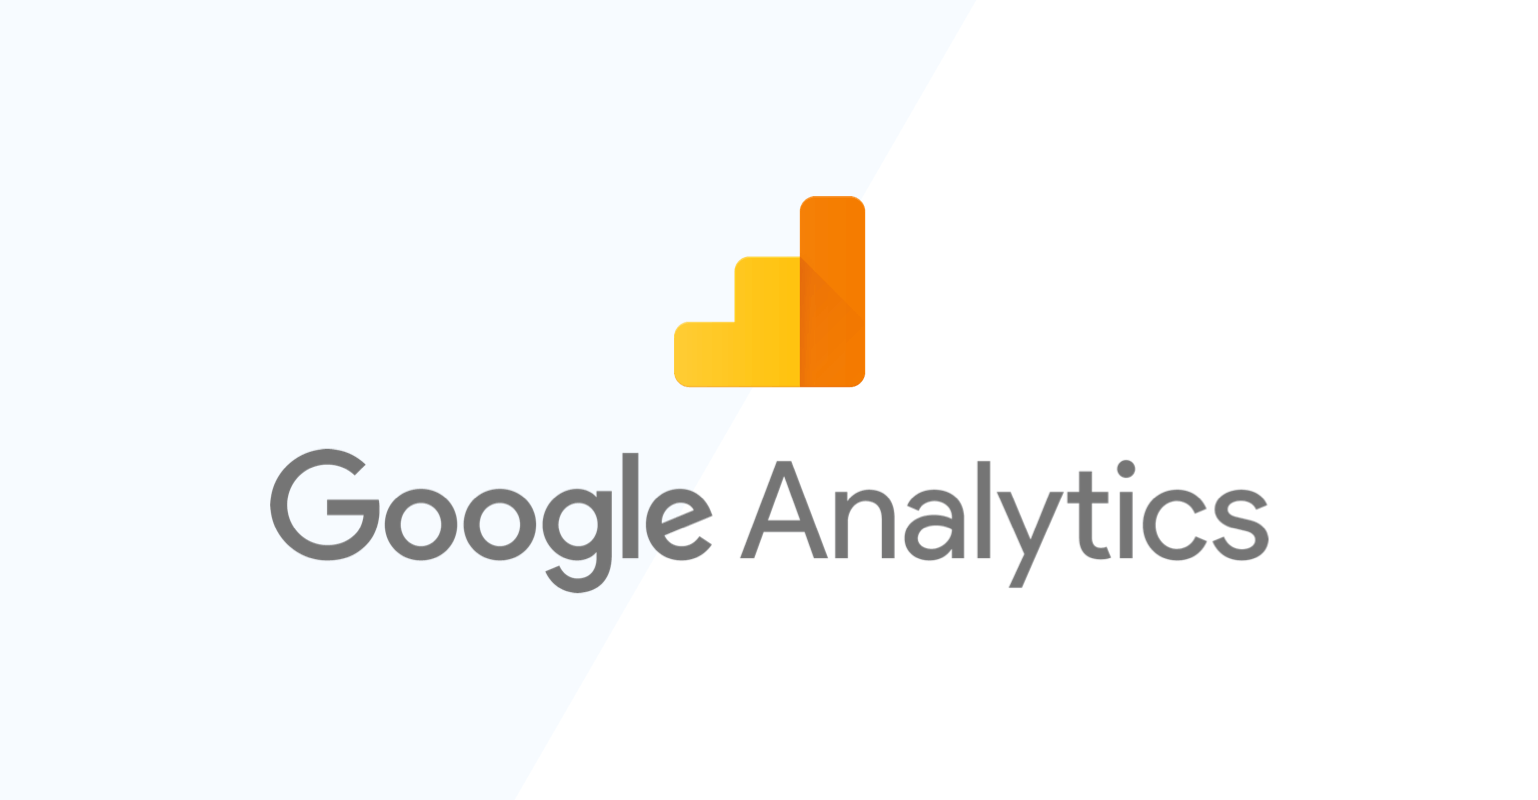 Google Analytics.png